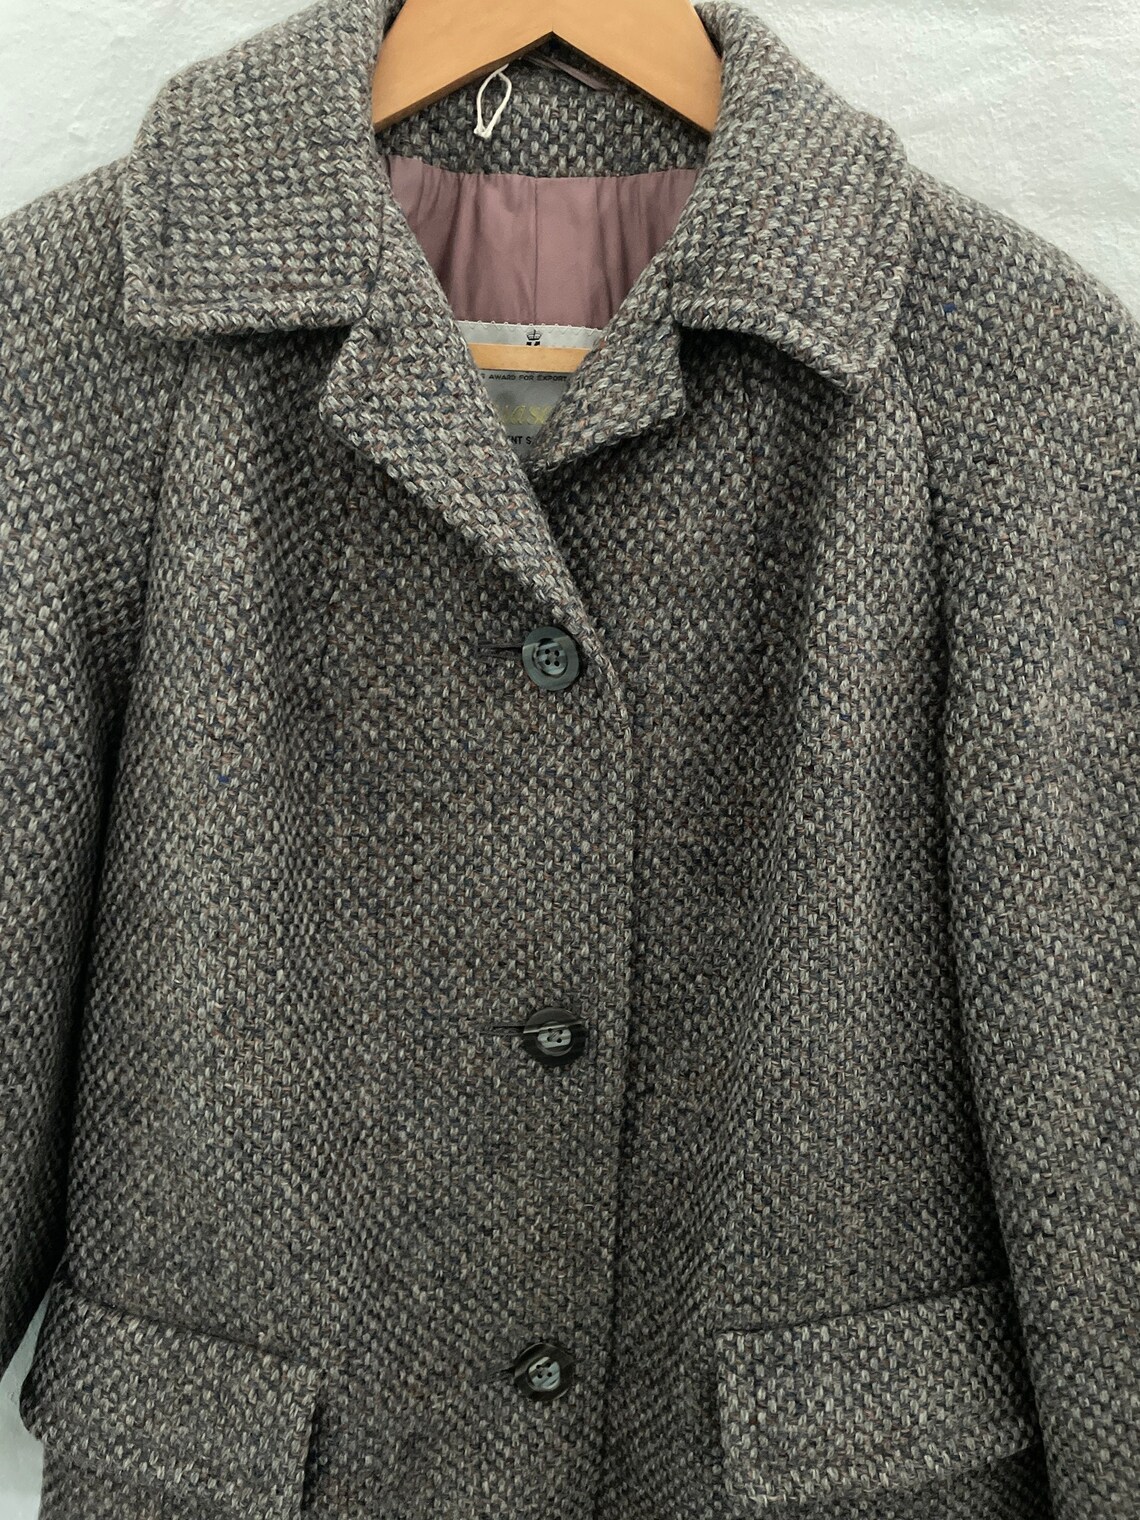 Vintage Ladies Aquascutum Wool Coat Size 10 | Etsy